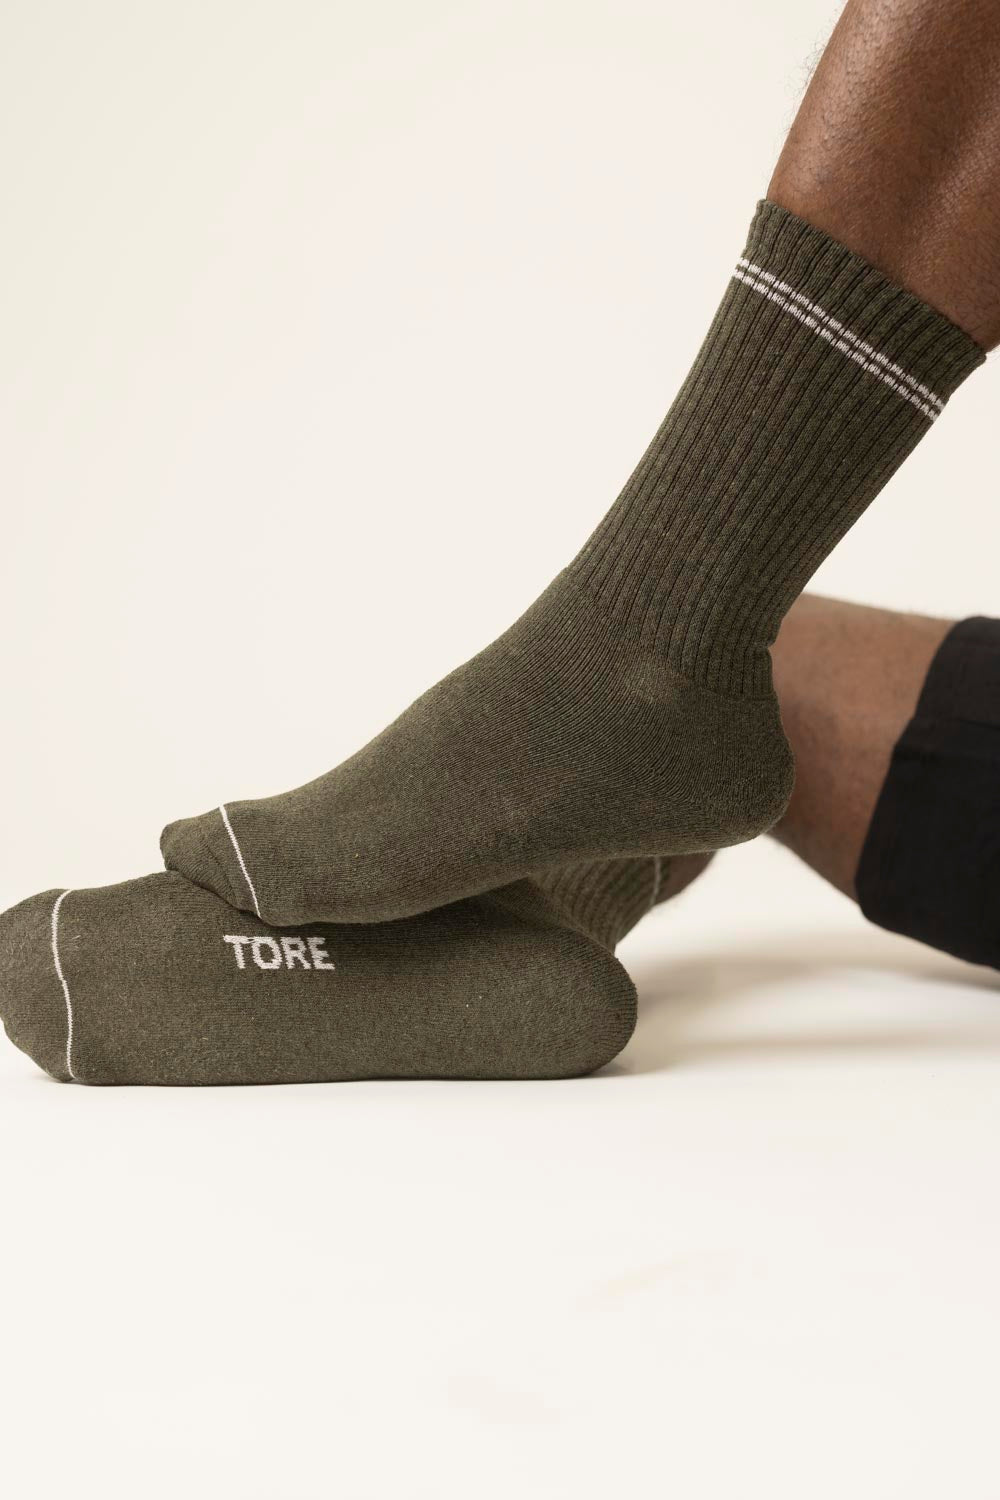 TORE 3PK 100% Recycled Striped Sports Crew Socks - Men's